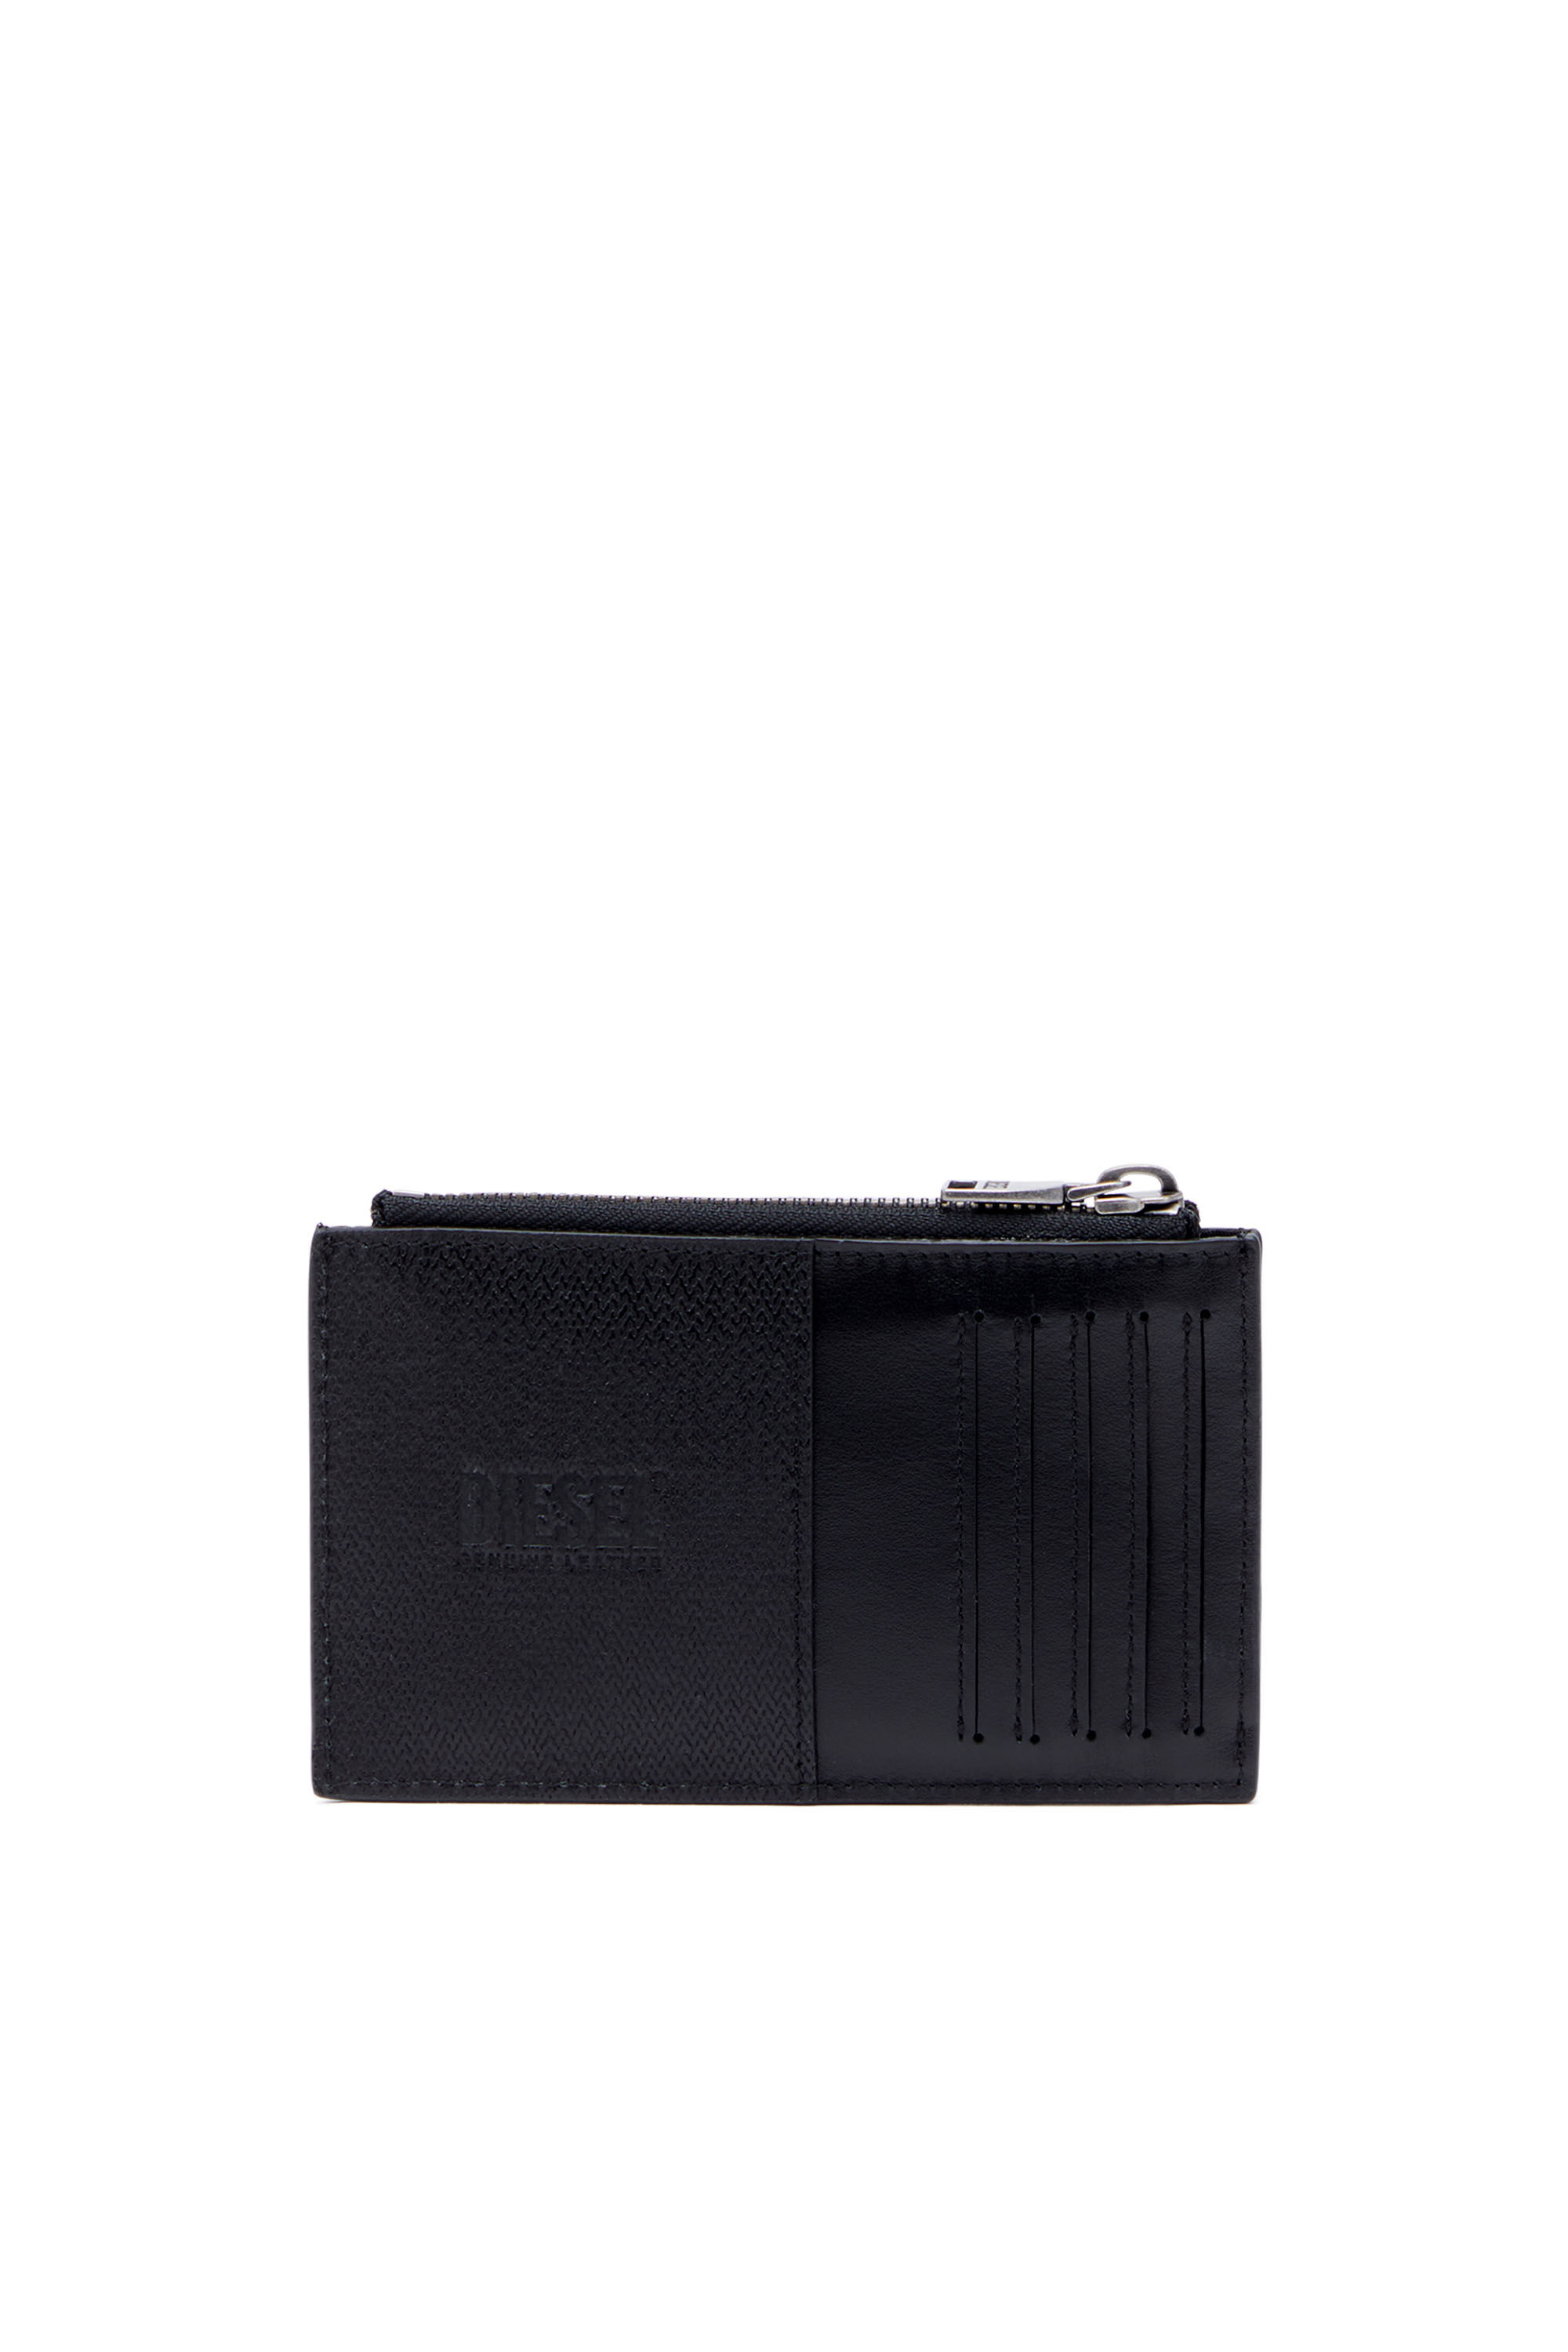 Diesel - CARD HOLDER COIN M, Man Slim card holder in textured leather in Black - Image 2